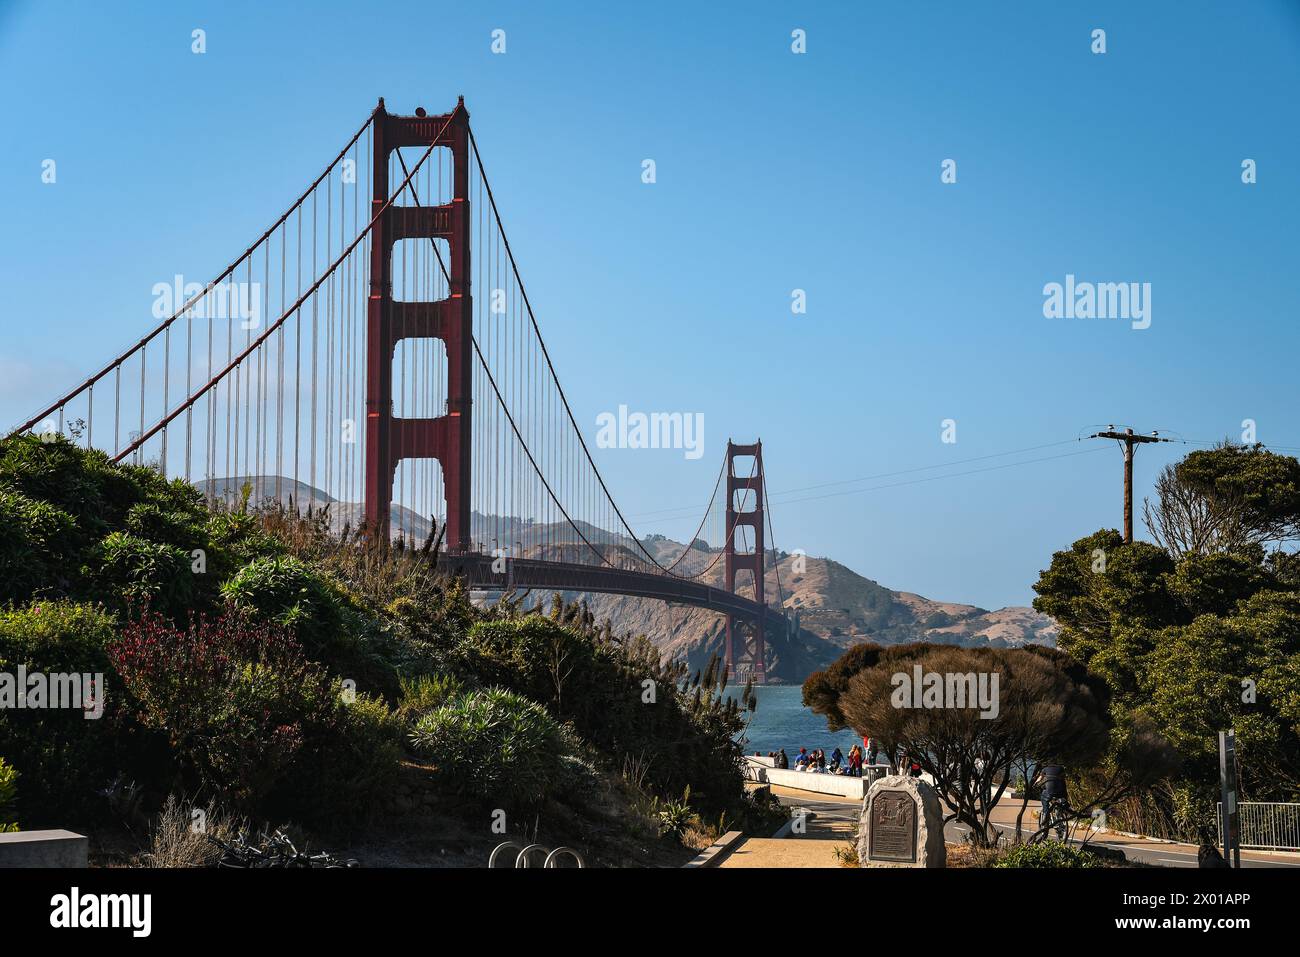 The Golden Gate Bridge seen from Joseph Strauss Legacy Circle in the Presidio District of San Francisco, California Stock Photo